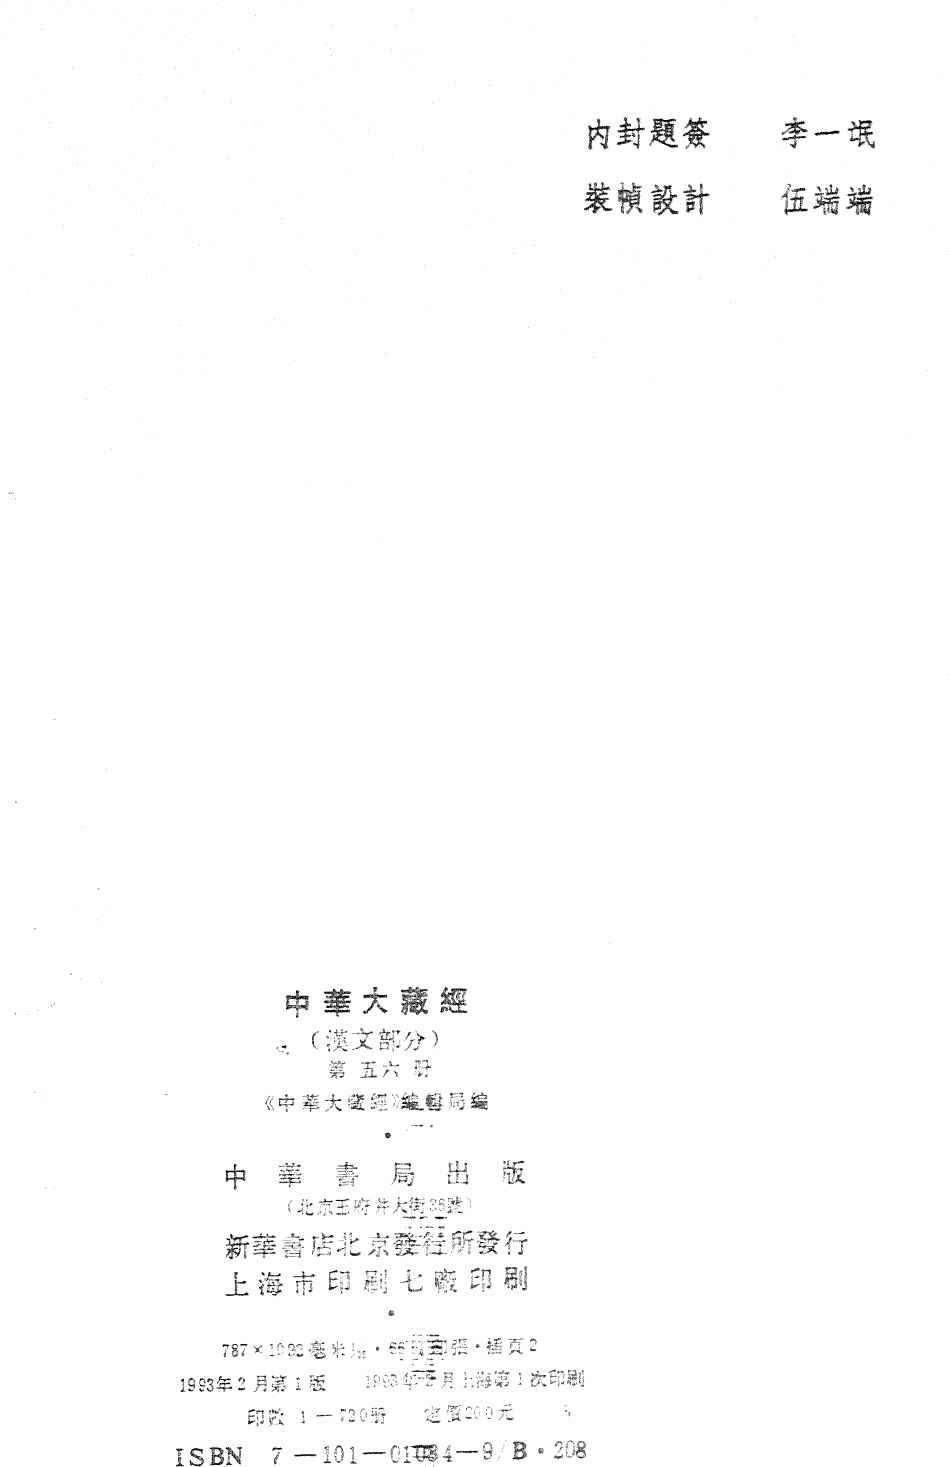 File:《中華大藏經》 第56冊 版權頁.png